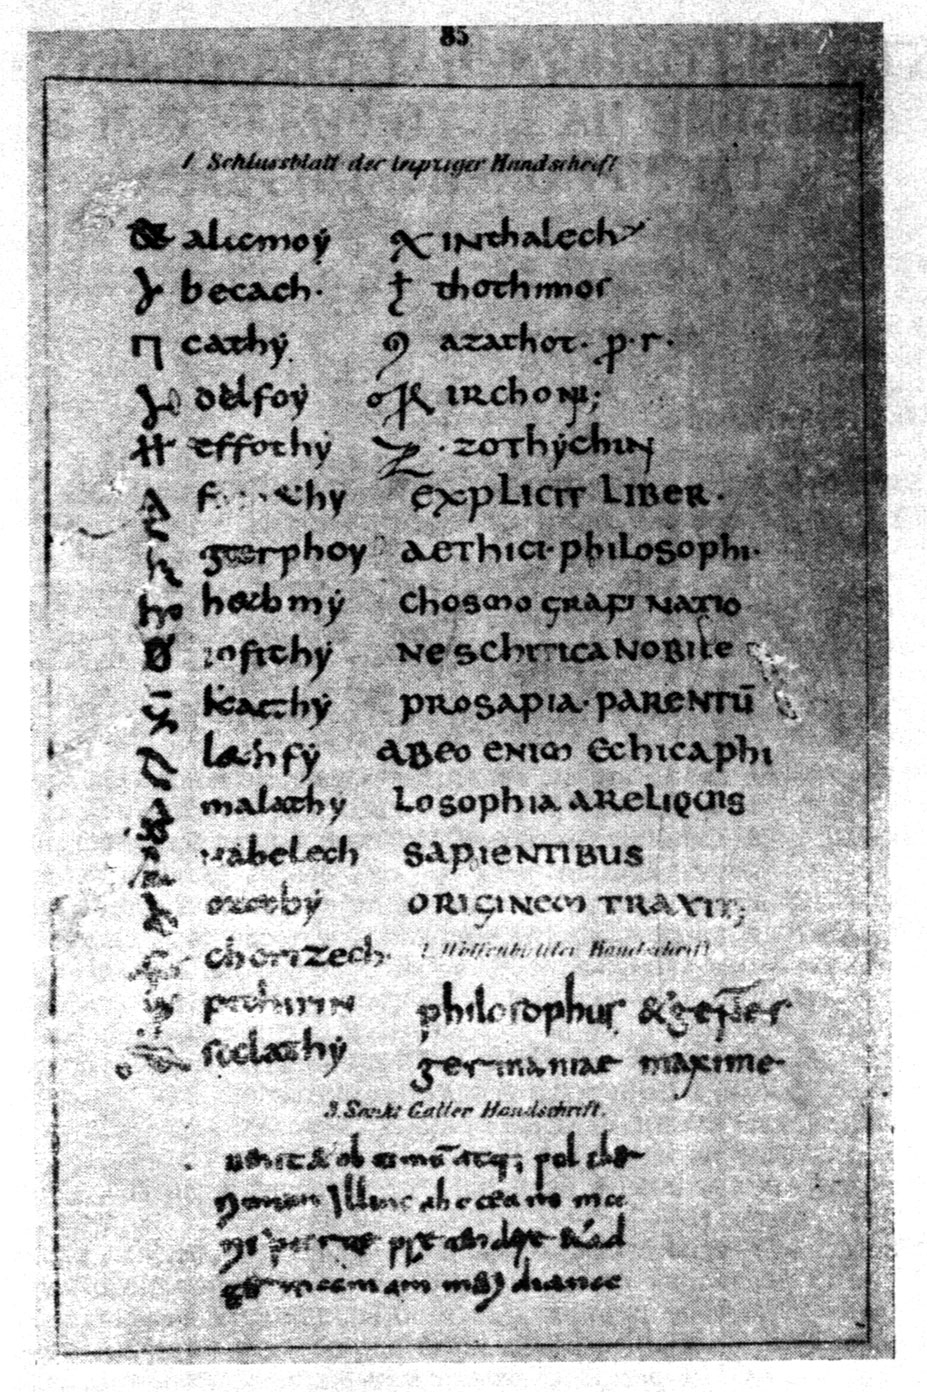 Aethicus Ister alphabet